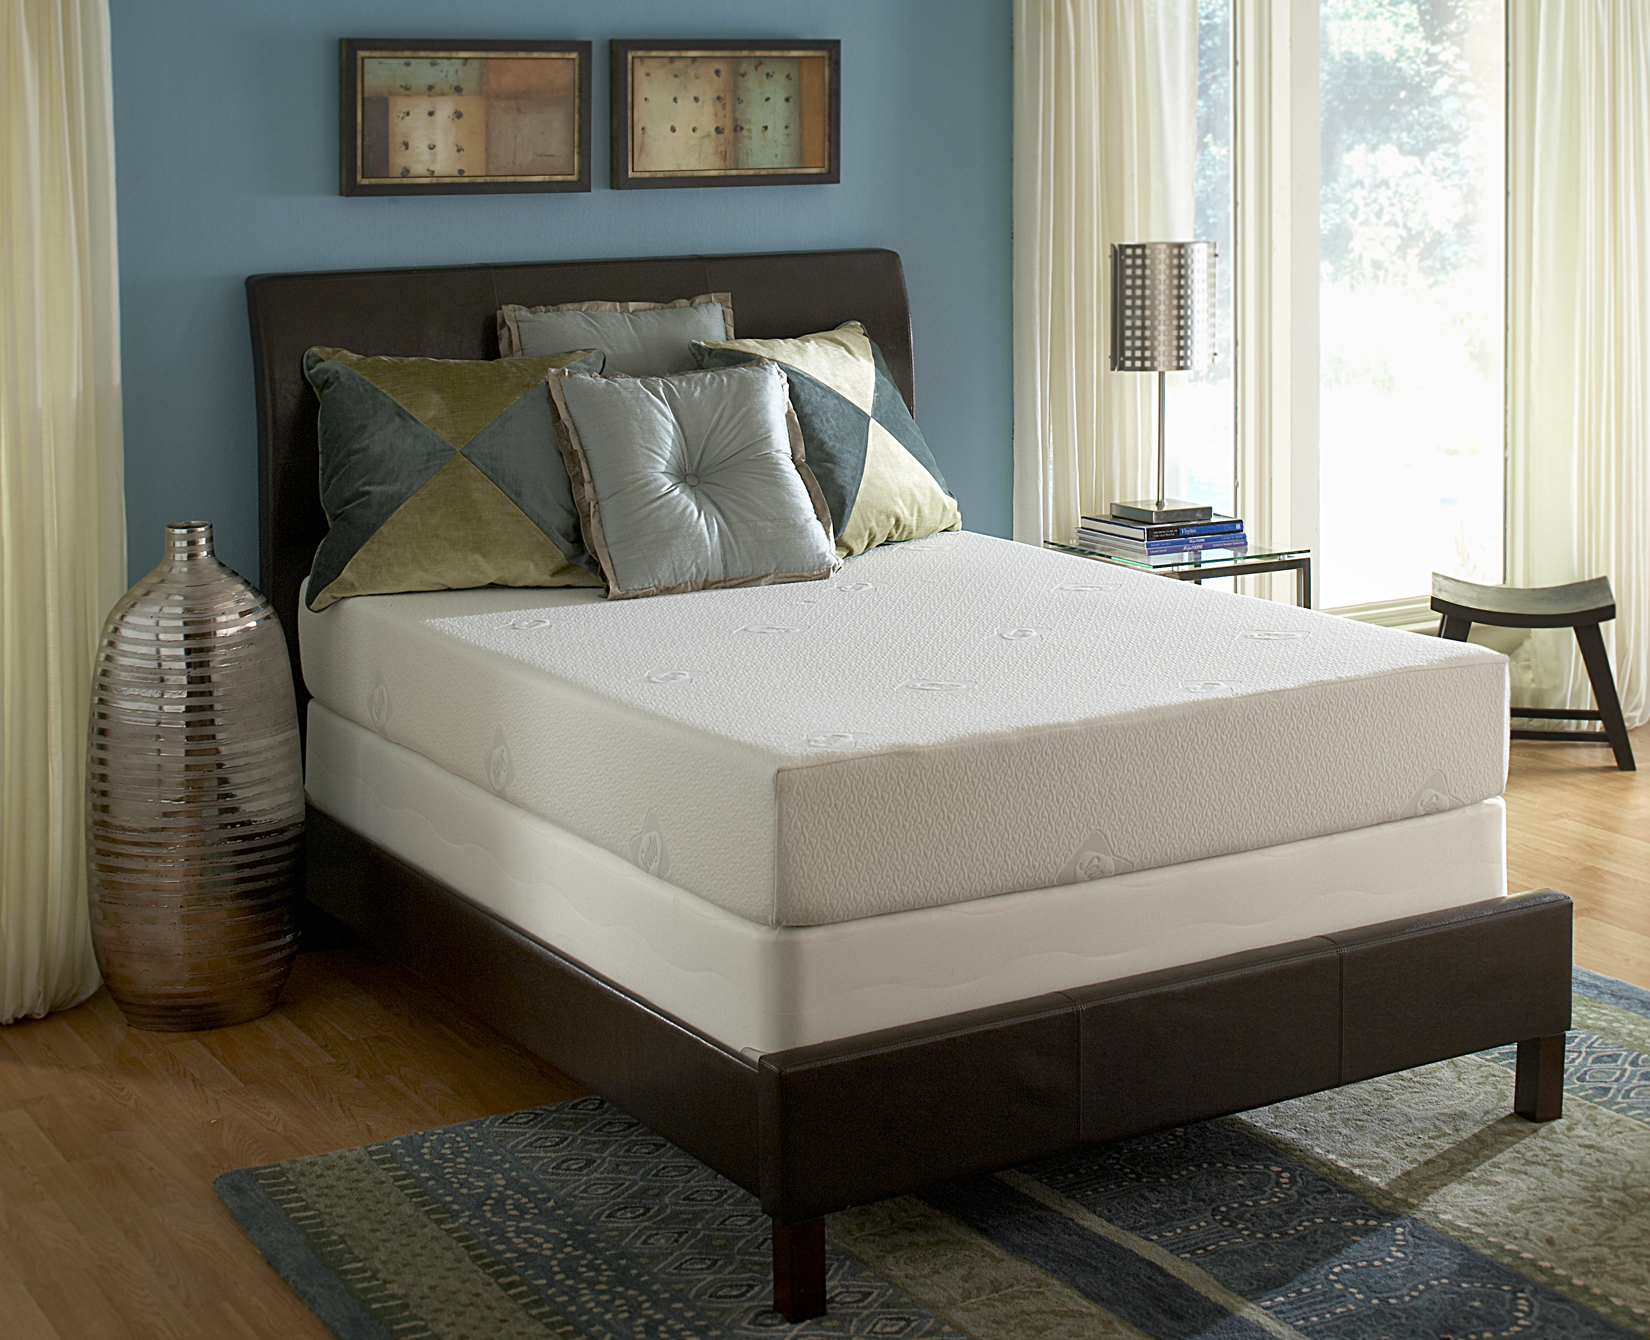 sealy comfort series memory foam mattress